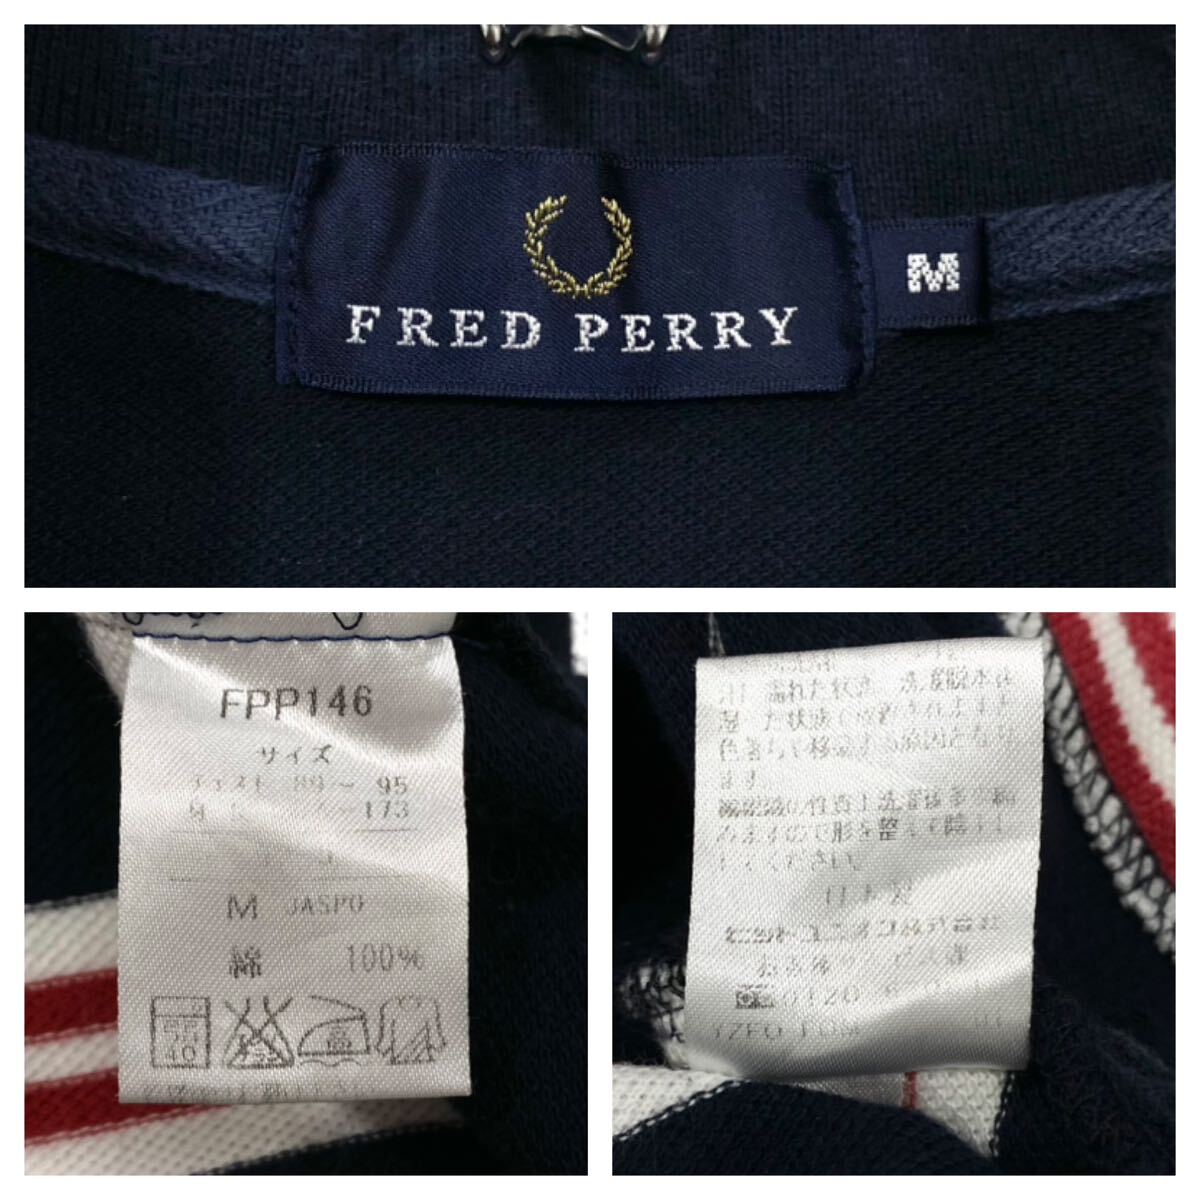 FRED PERRY(フレッドペリー)半袖ポロシャツ 刺繍ロゴ 鹿の子 ボーダー柄 メンズM ネイビー系/ホワイト/レッド系の画像2